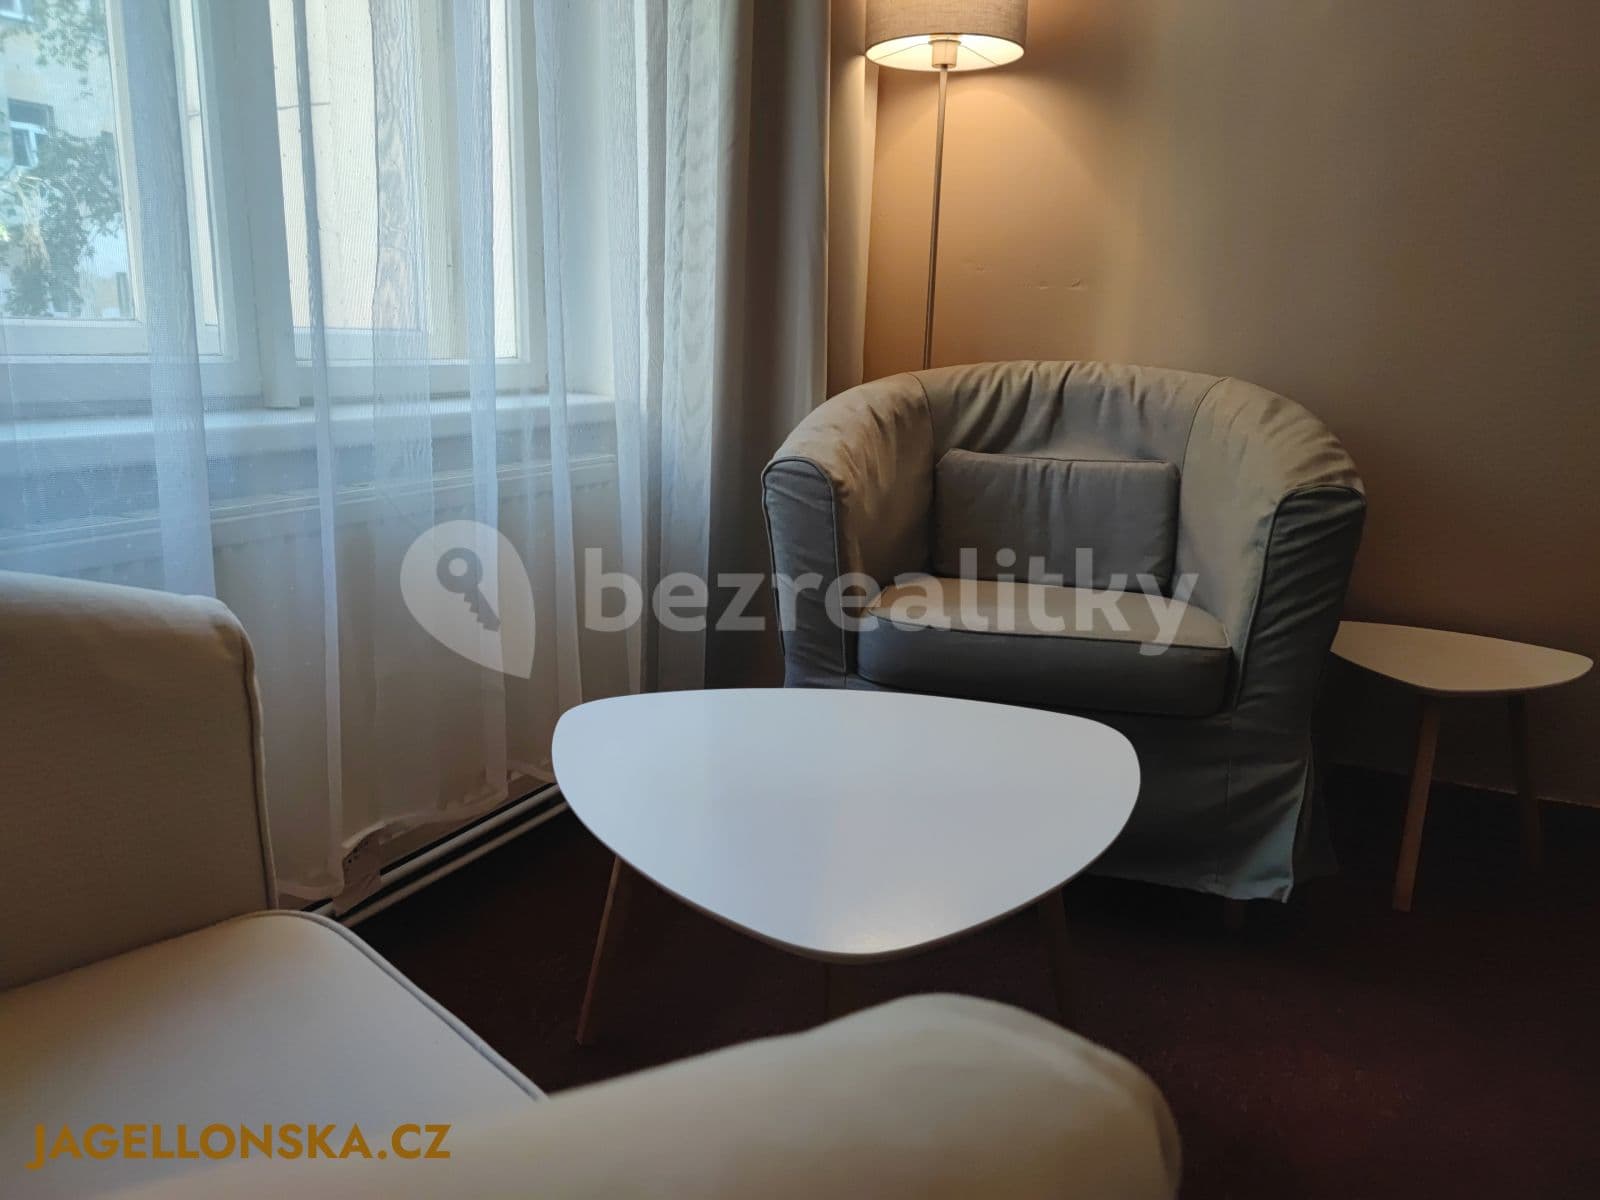 1 bedroom with open-plan kitchen flat to rent, 50 m², Jagellonská, Prague, Prague